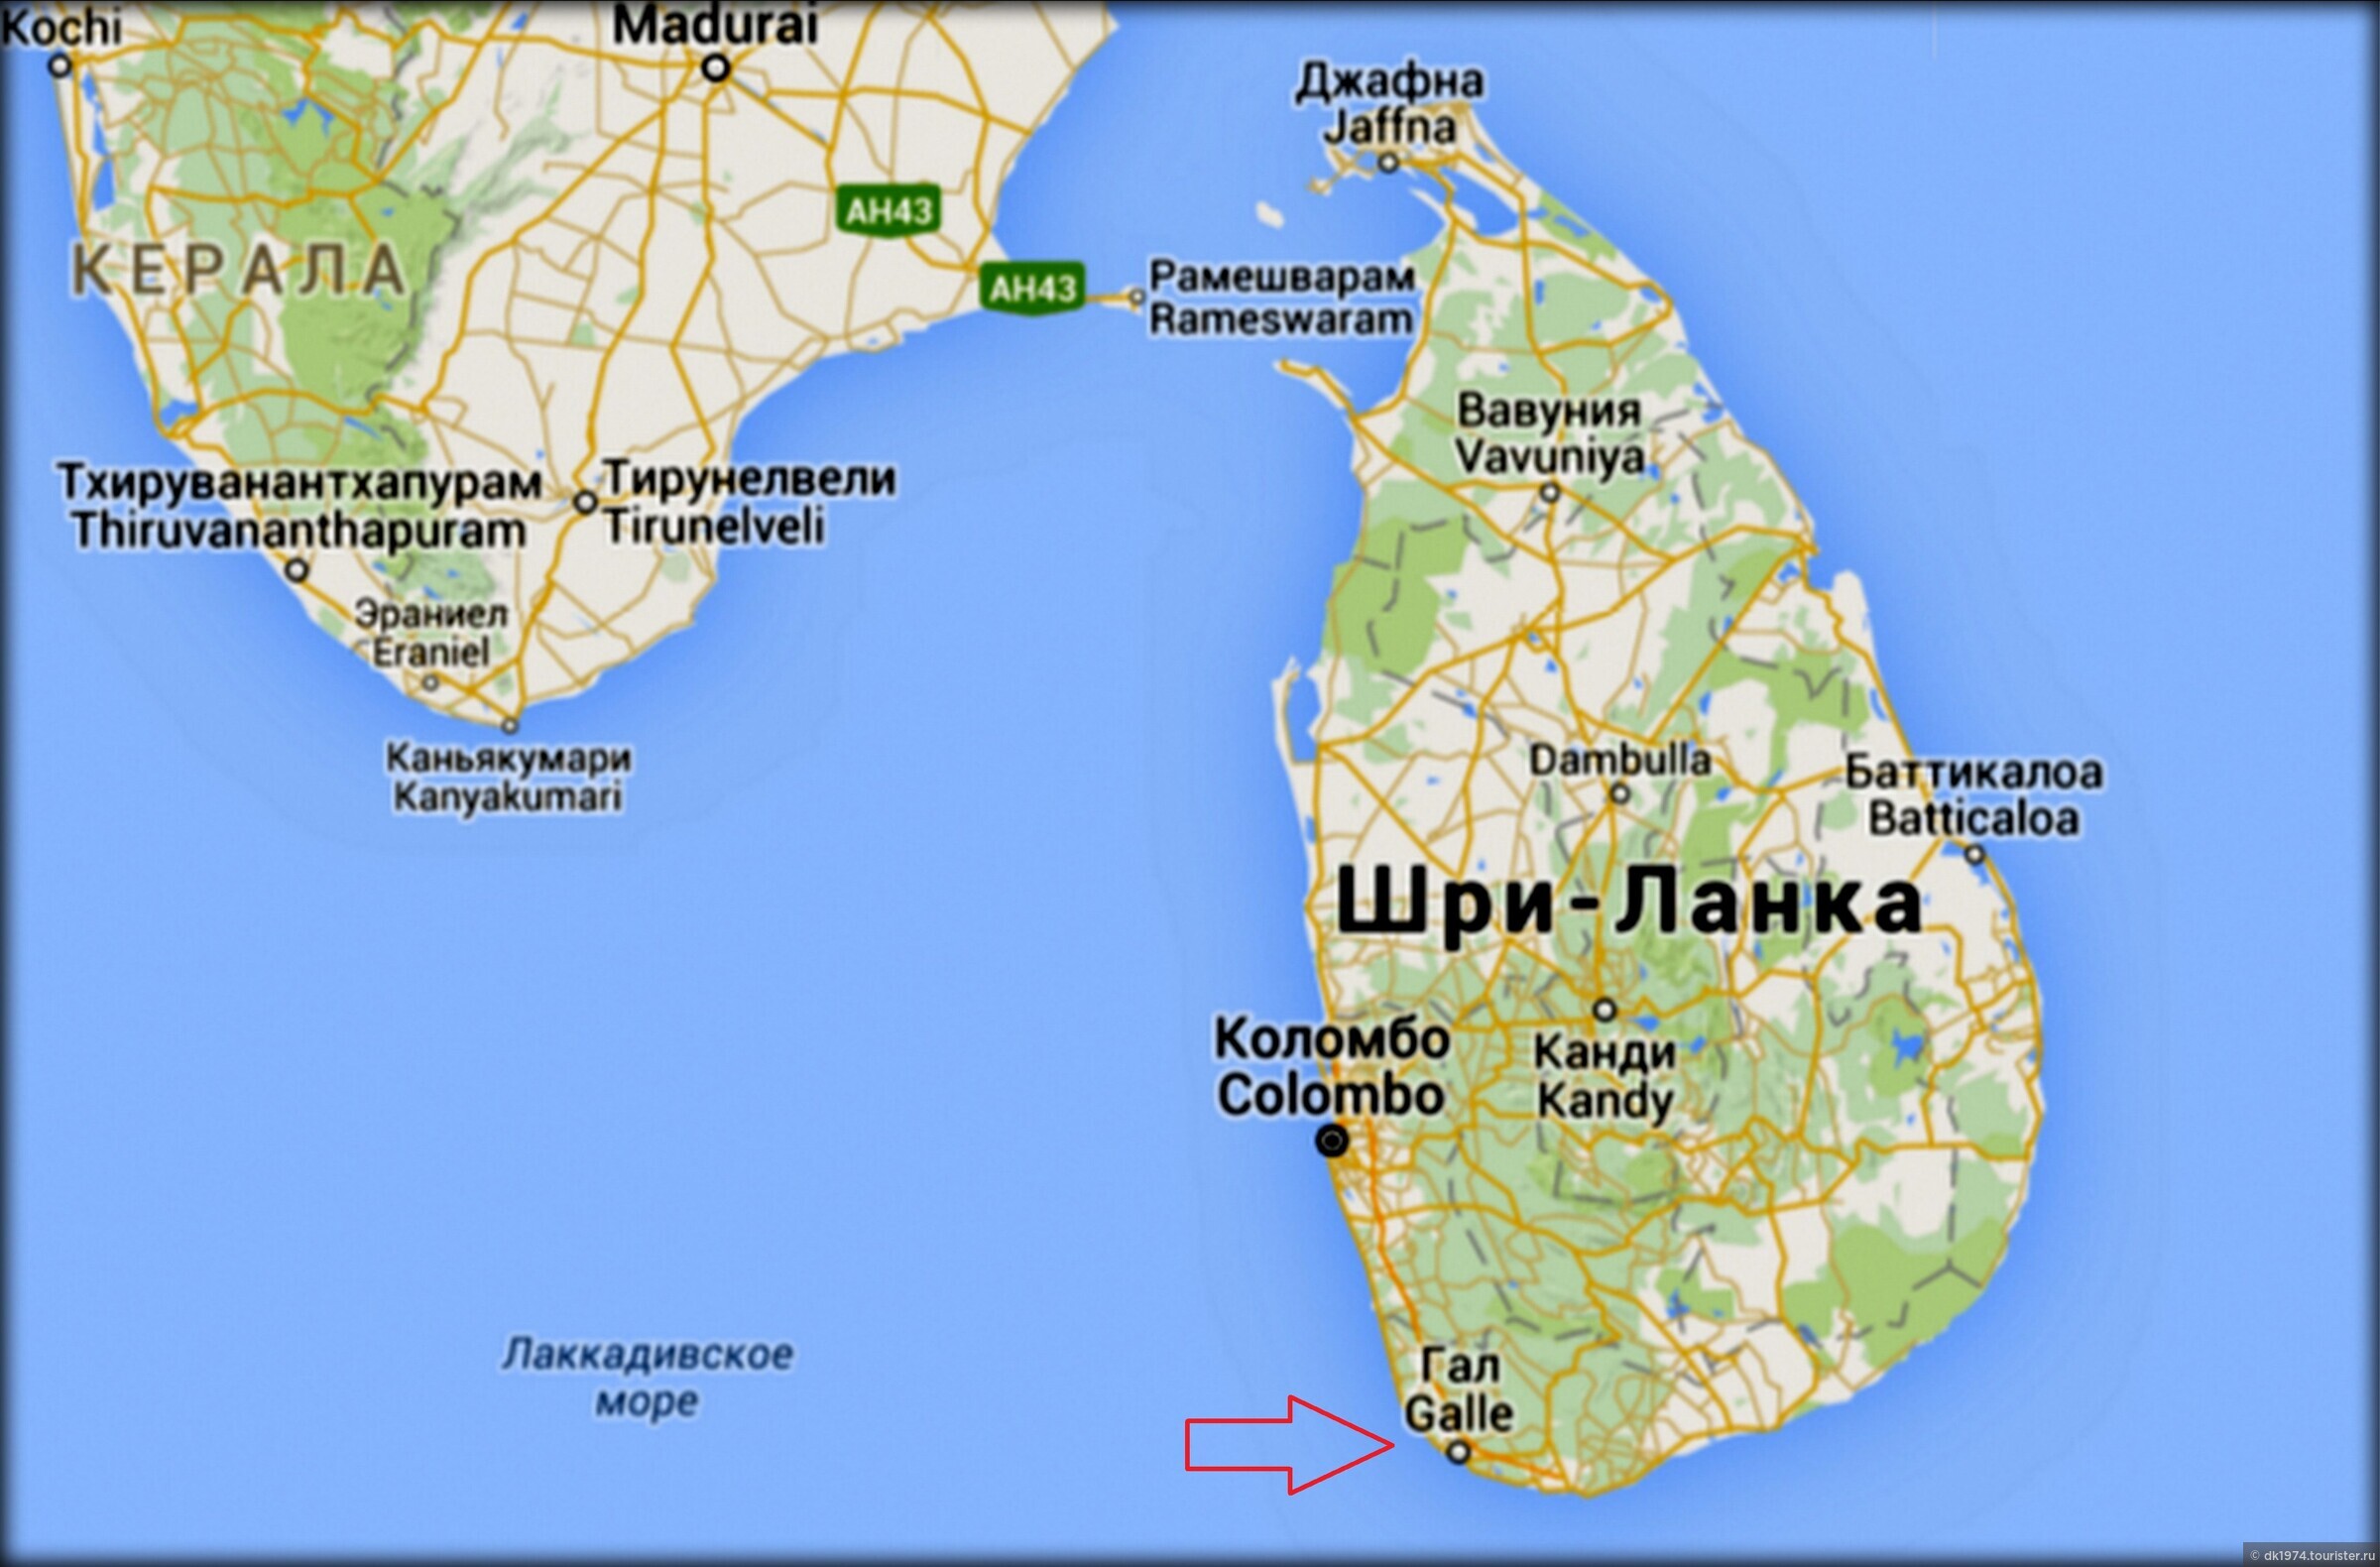 Шри ланка страна карта. Географическая карта острова Шри Ланка. Карта Шри Ланки географическая. Остров Цейлон на карте. Остров Шри Ланка на атласе.